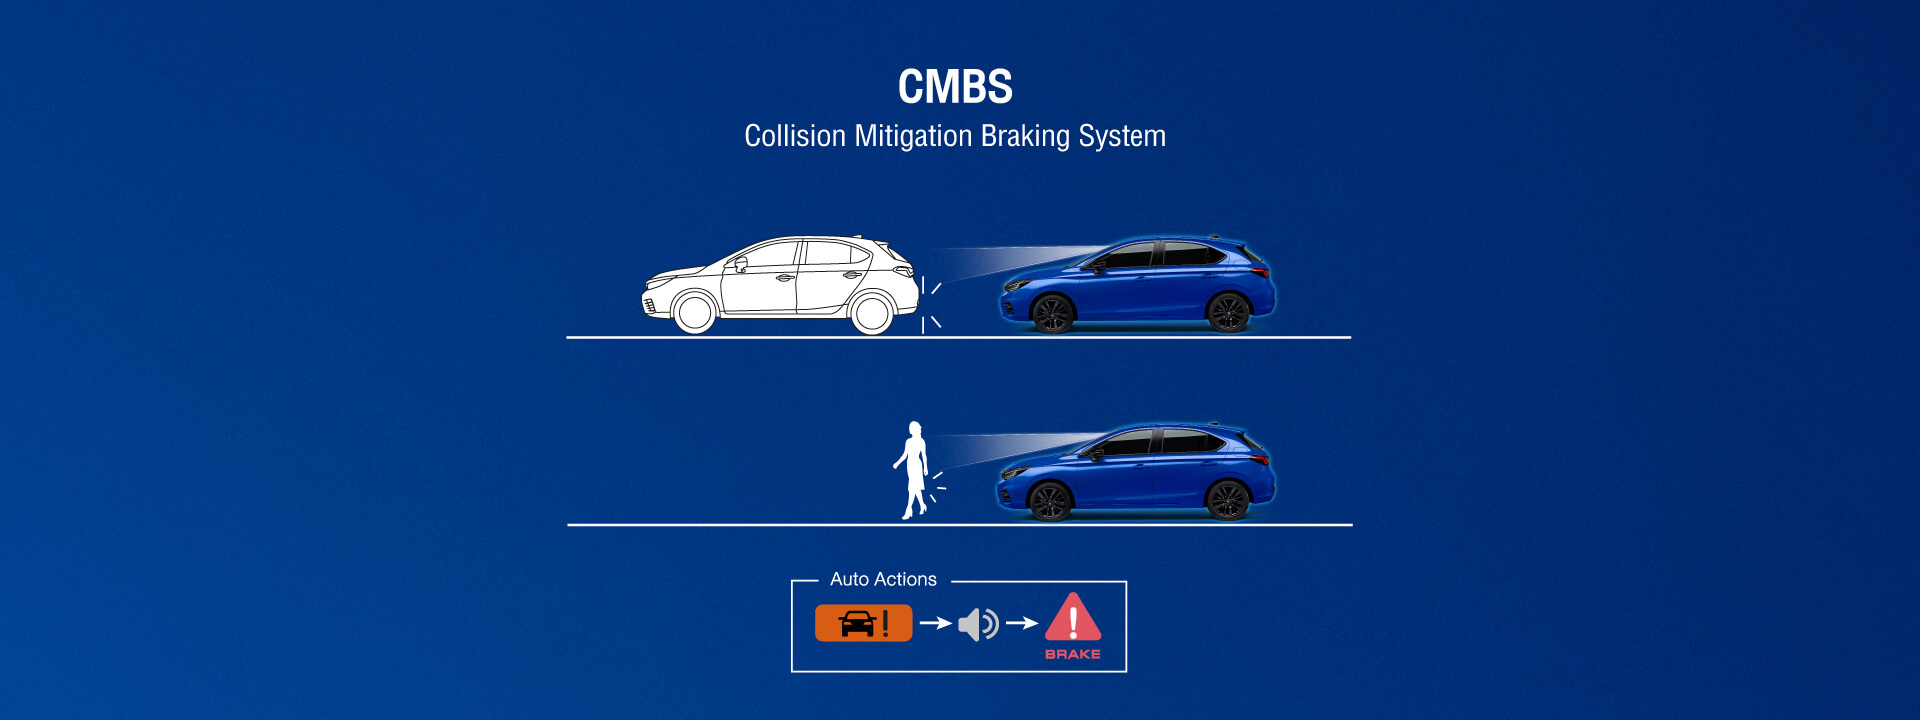 Collision Mitigation Braking System (CMBS) ระบบเตือนการชนพร้อมระบบช่วยเบรก